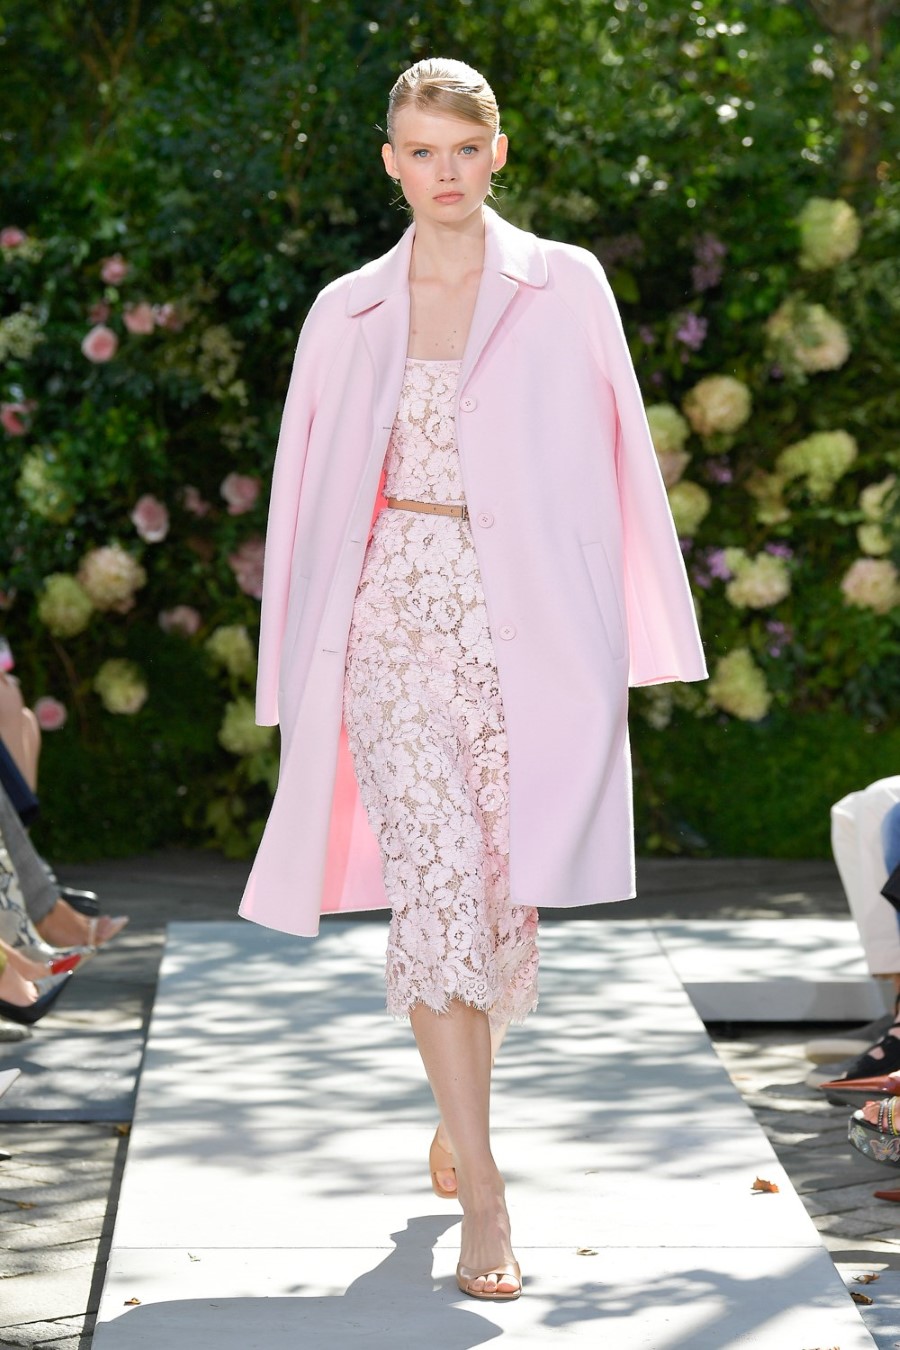 Michael Kors Collection Spring Summer 2022 - New York Fashion Week